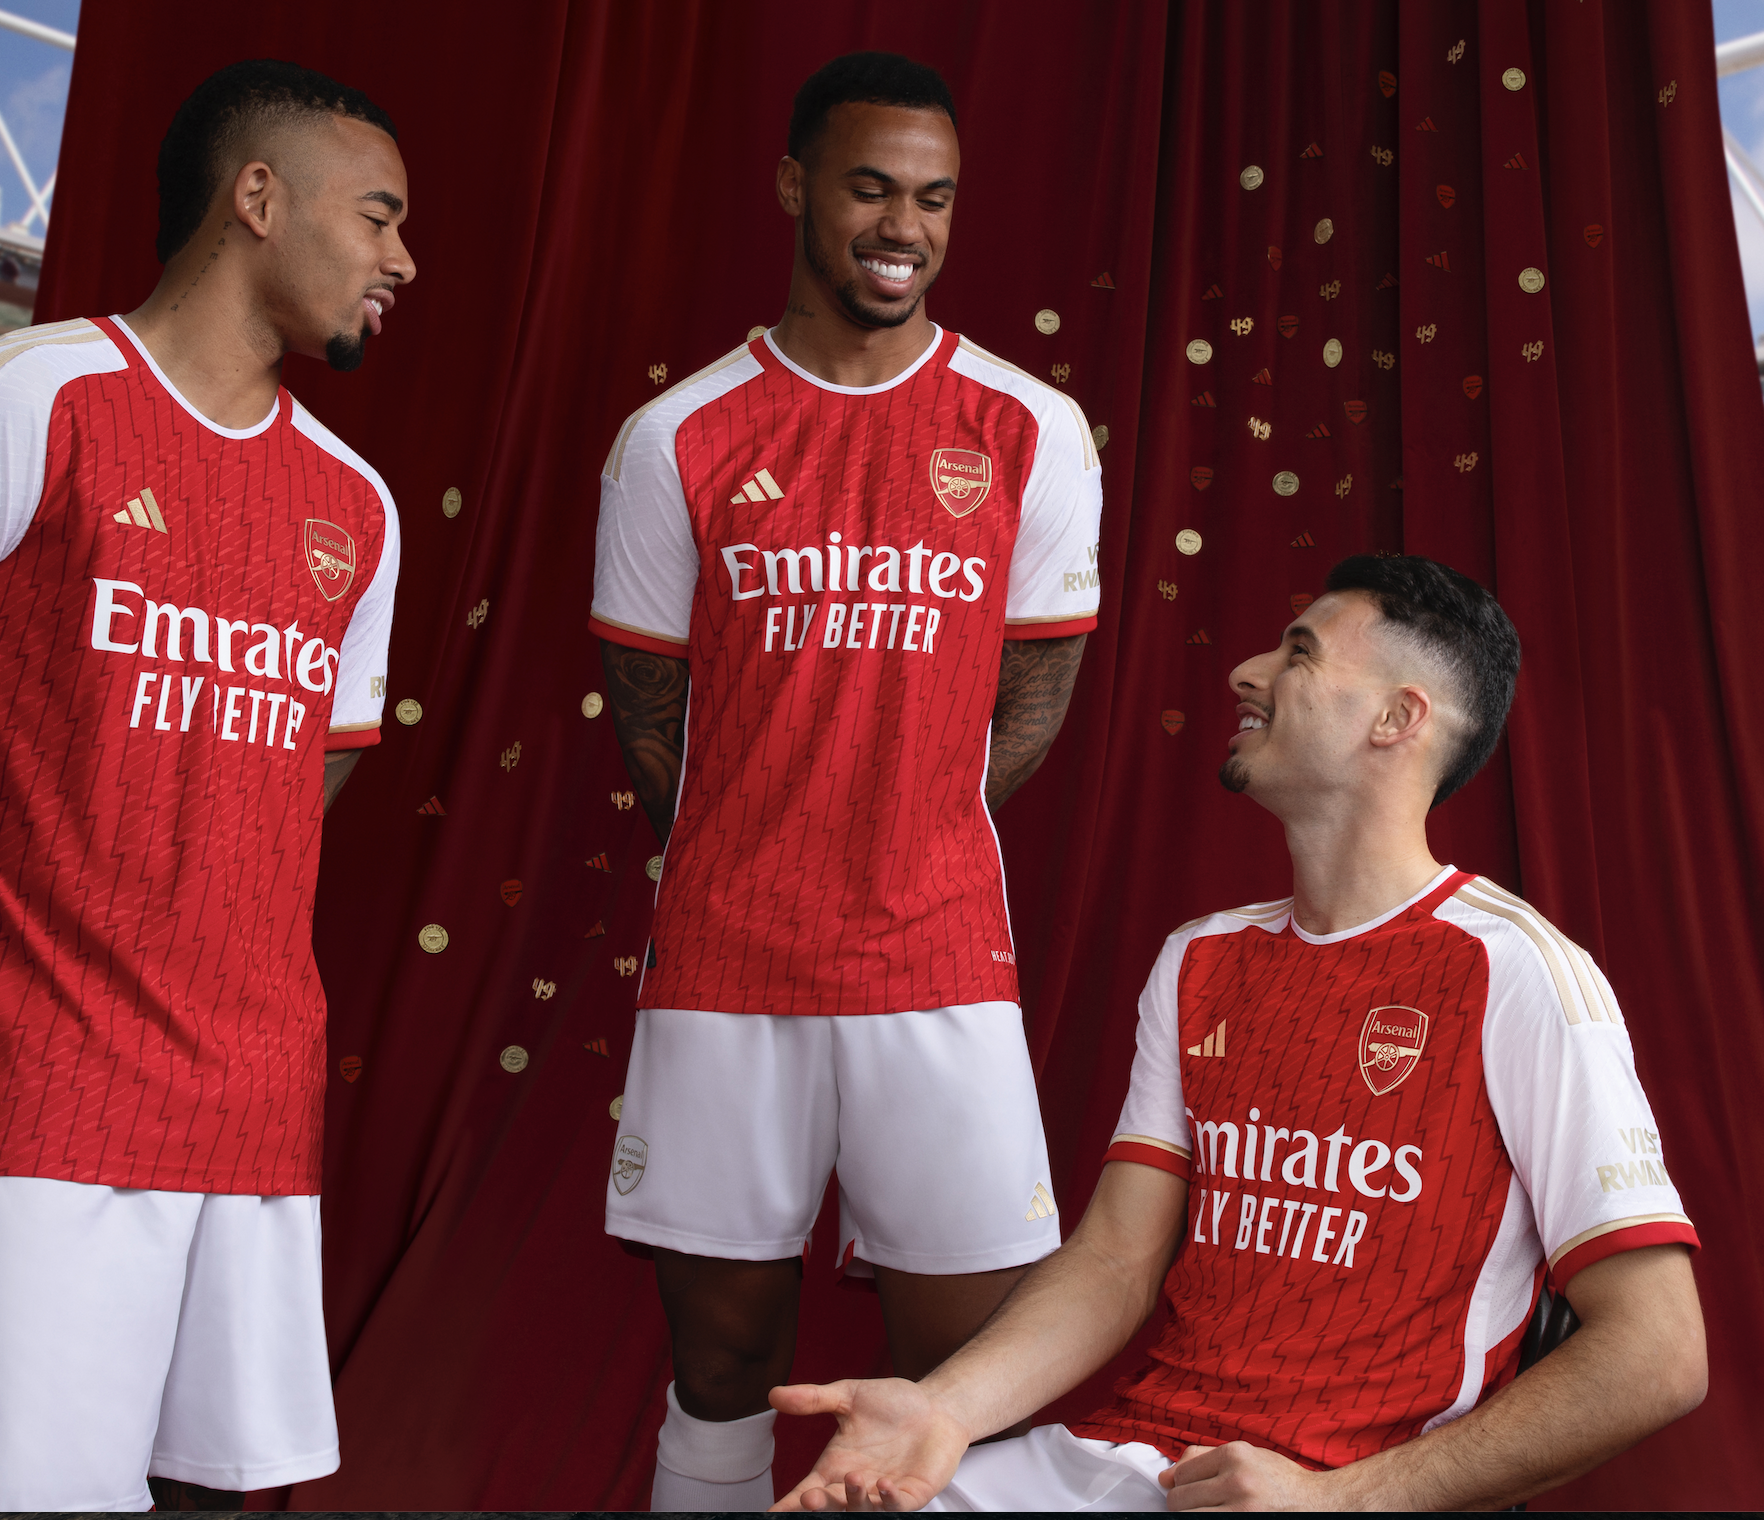 adidas x Arsenal  Introducing the Arsenal 2019/20 home jersey 